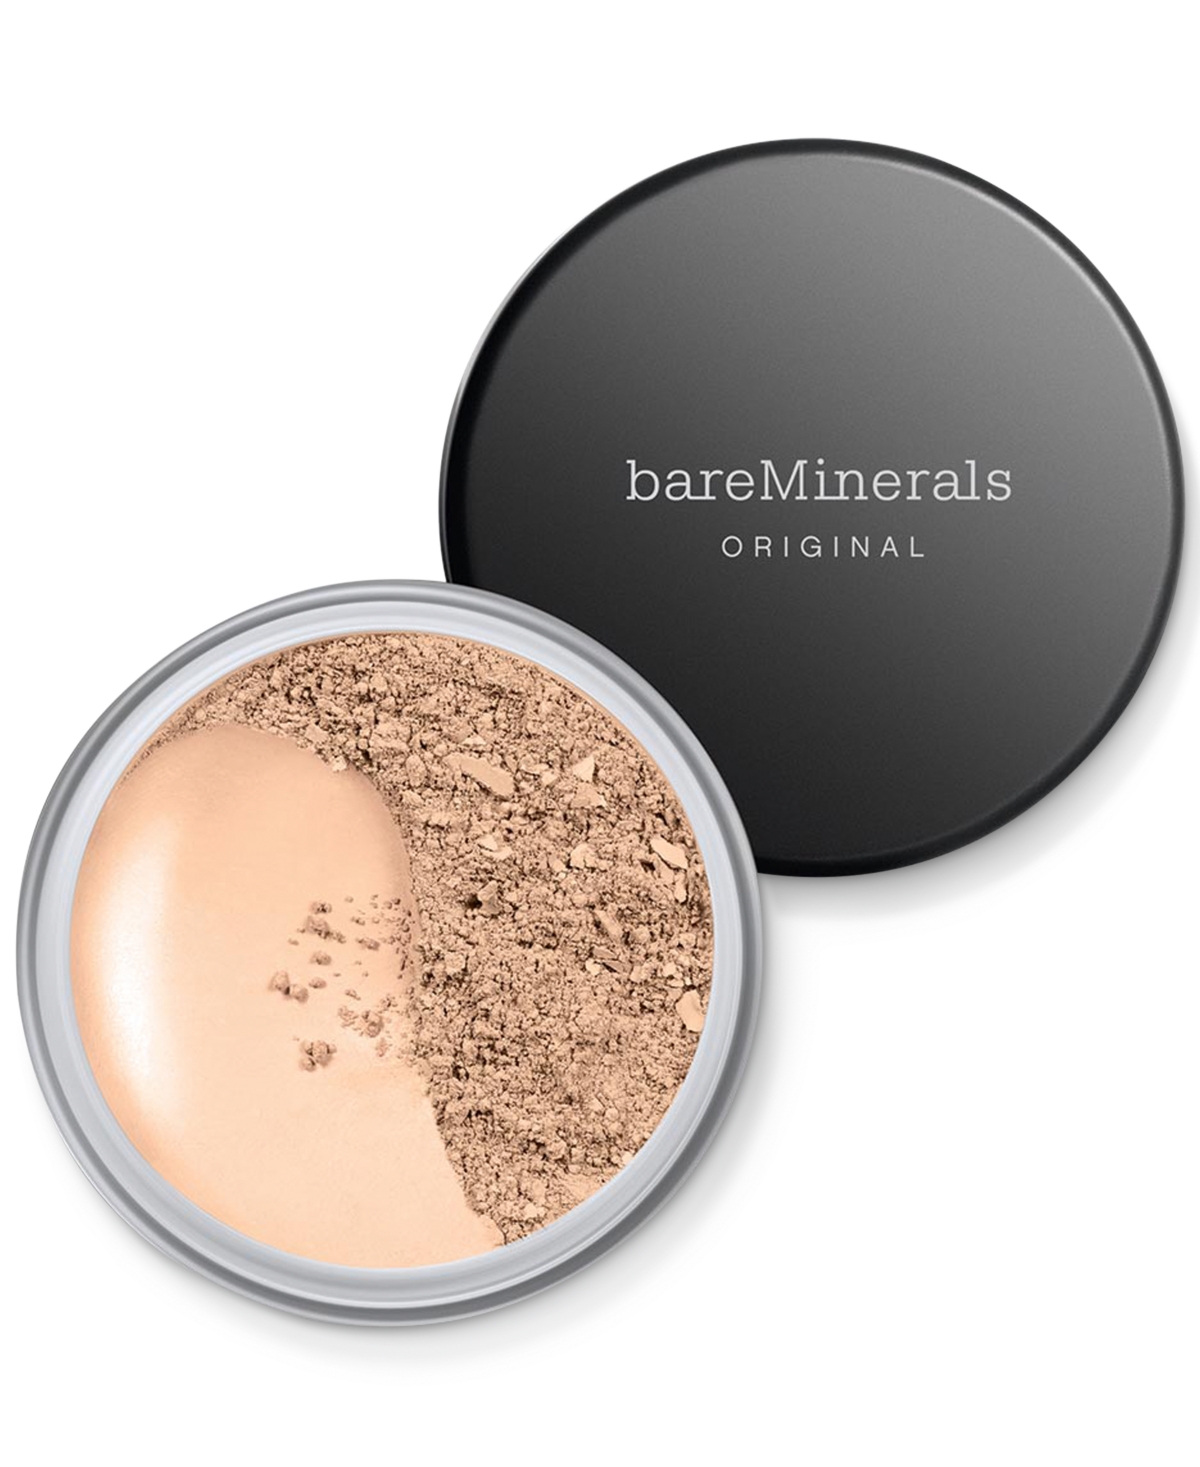 Bareminerals Original Loose Powder Foundation Spf 15 In Fair  - For Fairest Porcelain Skin With